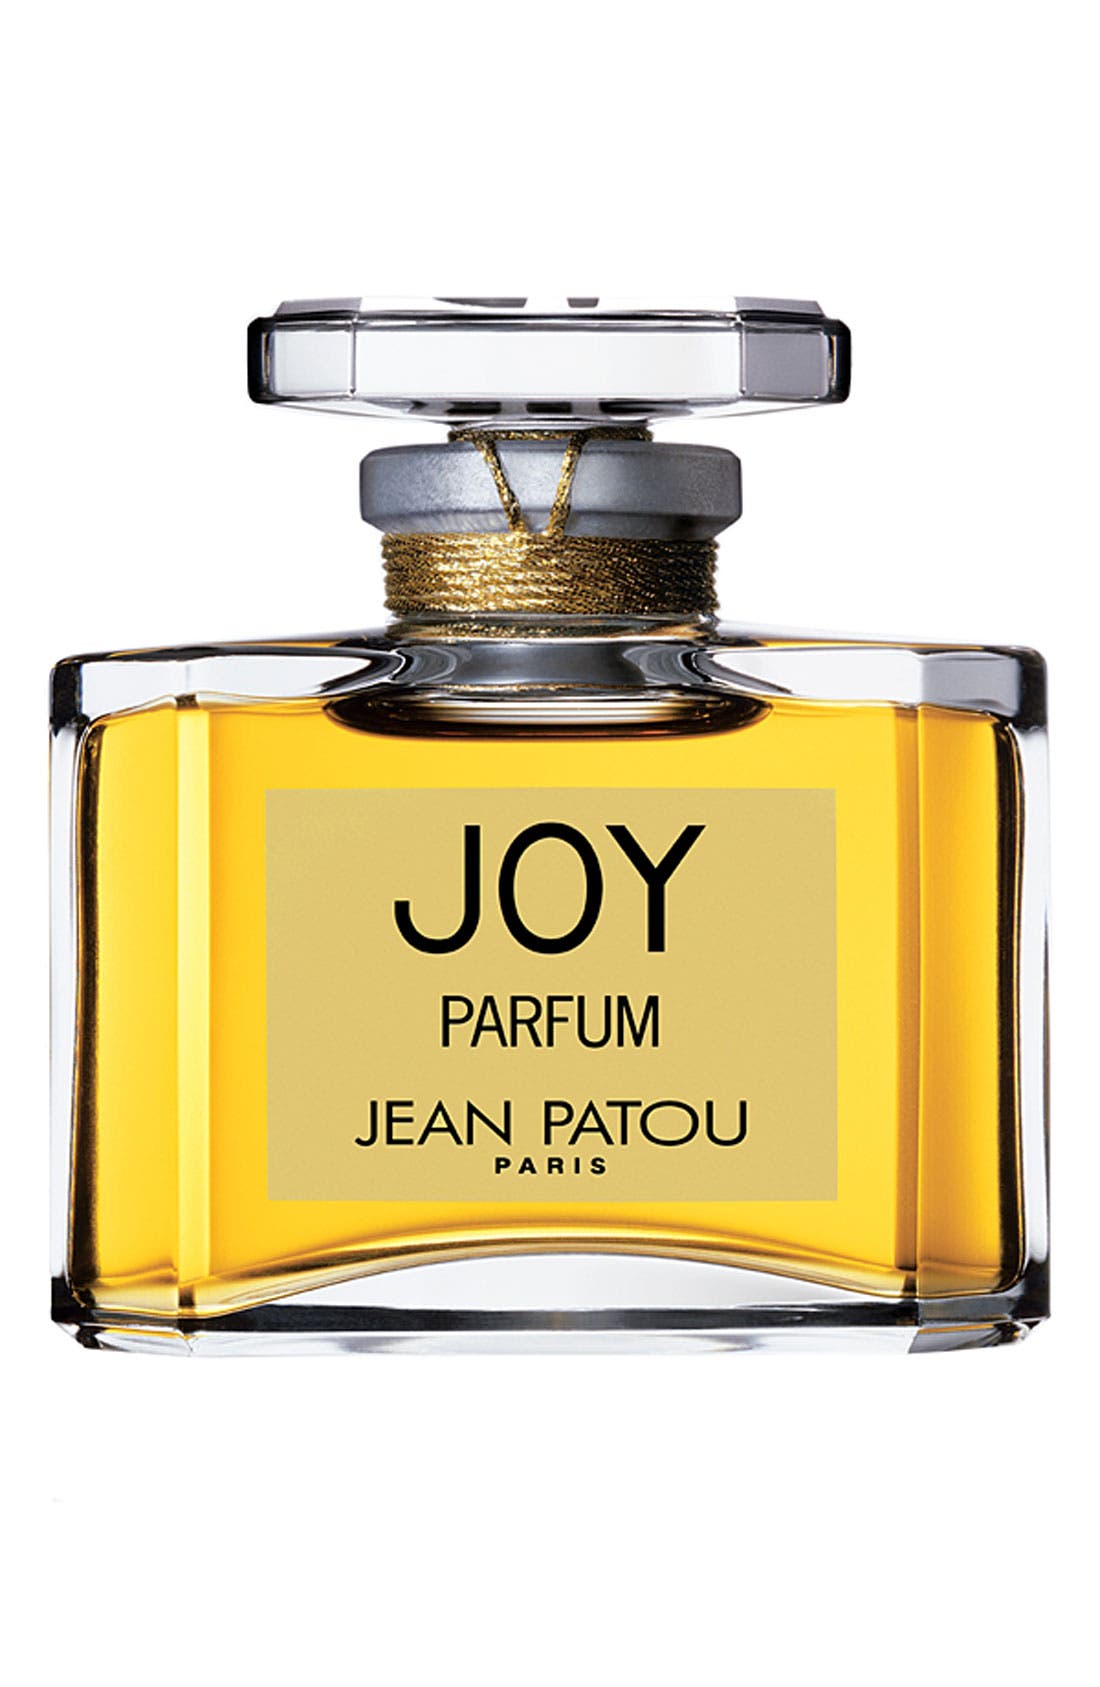 jean patou perfume price